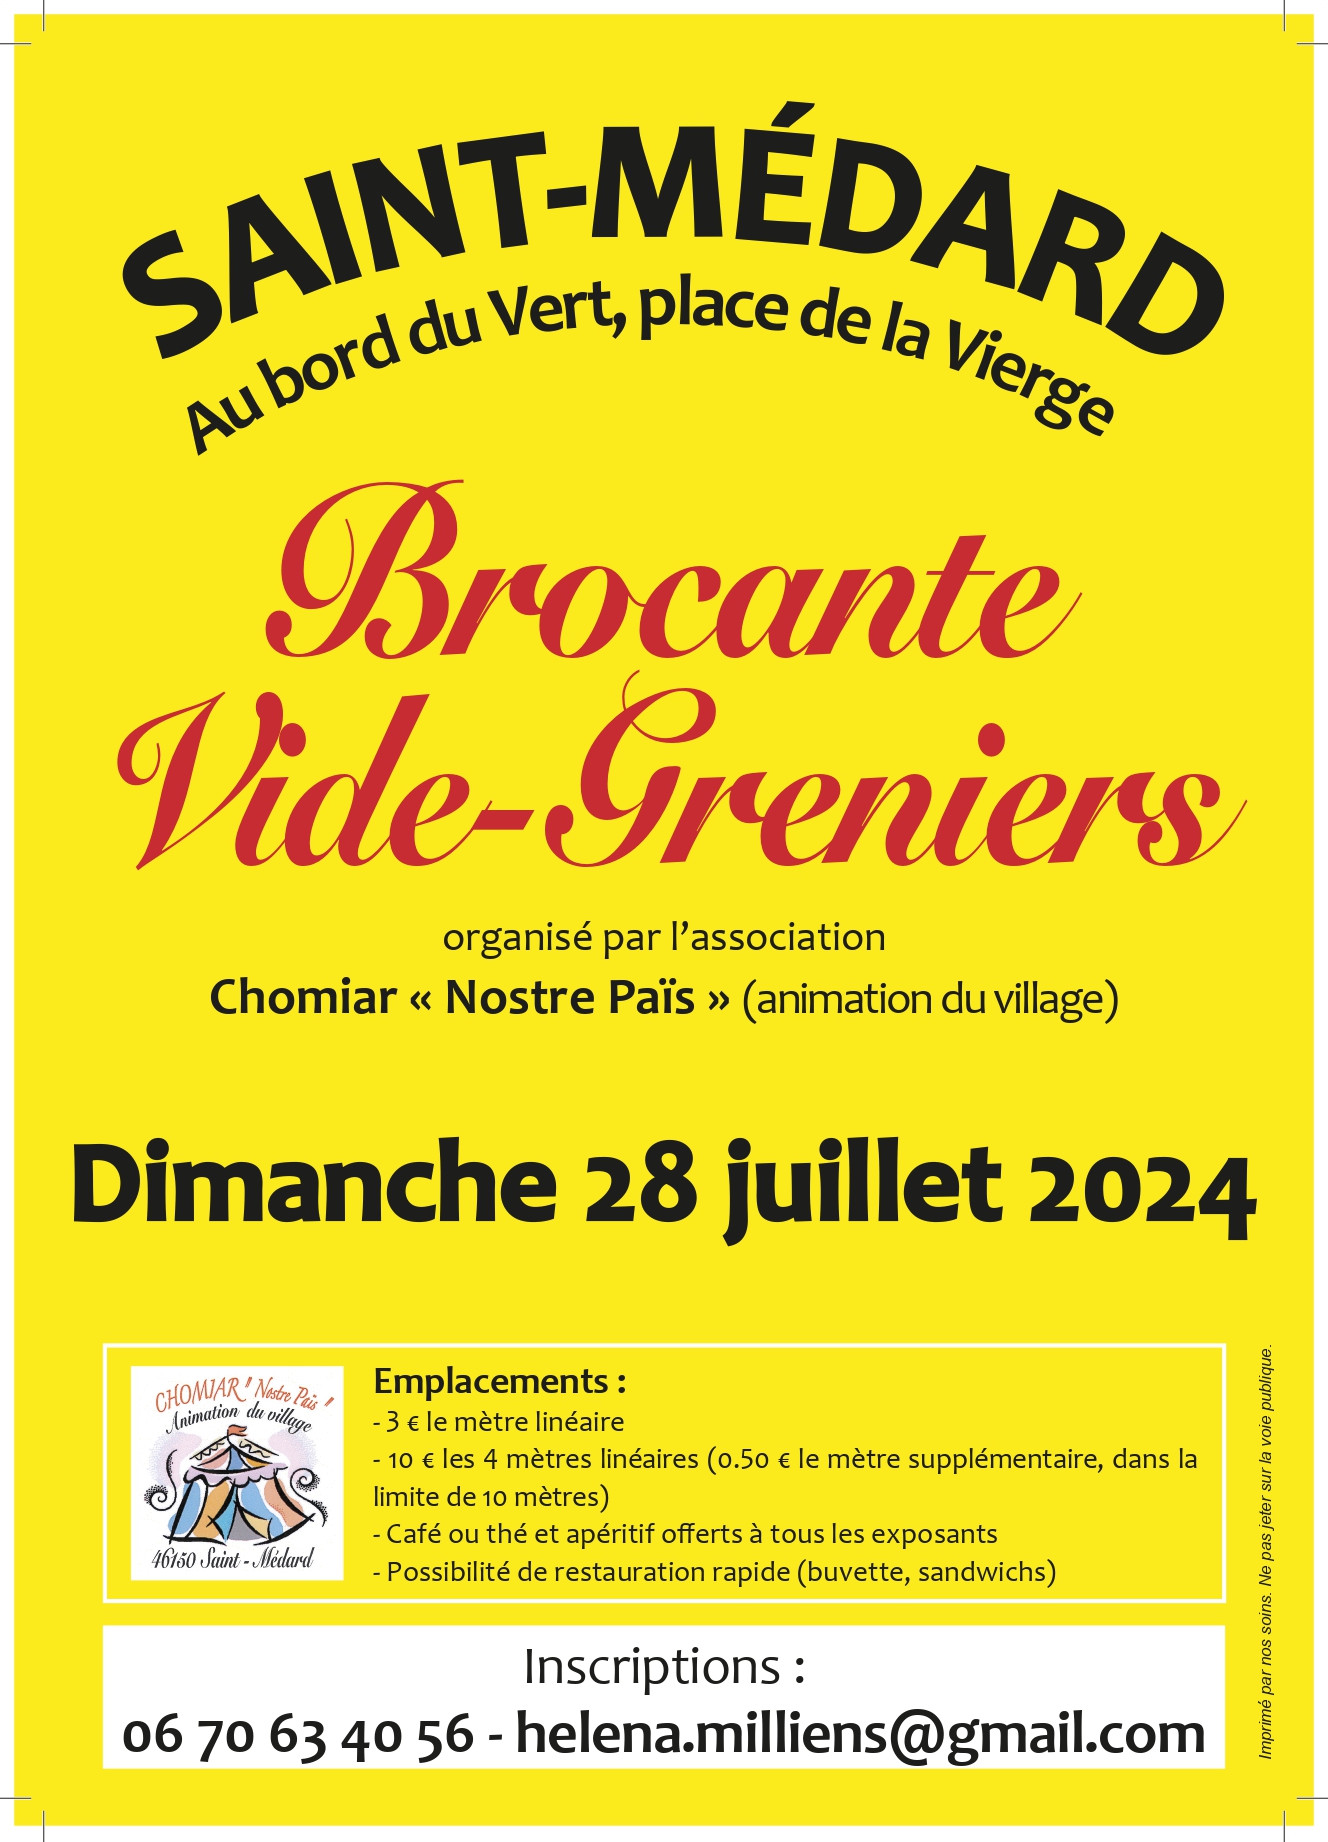 Figeac : Brocante /Vide-Greniers à Saint-Médard